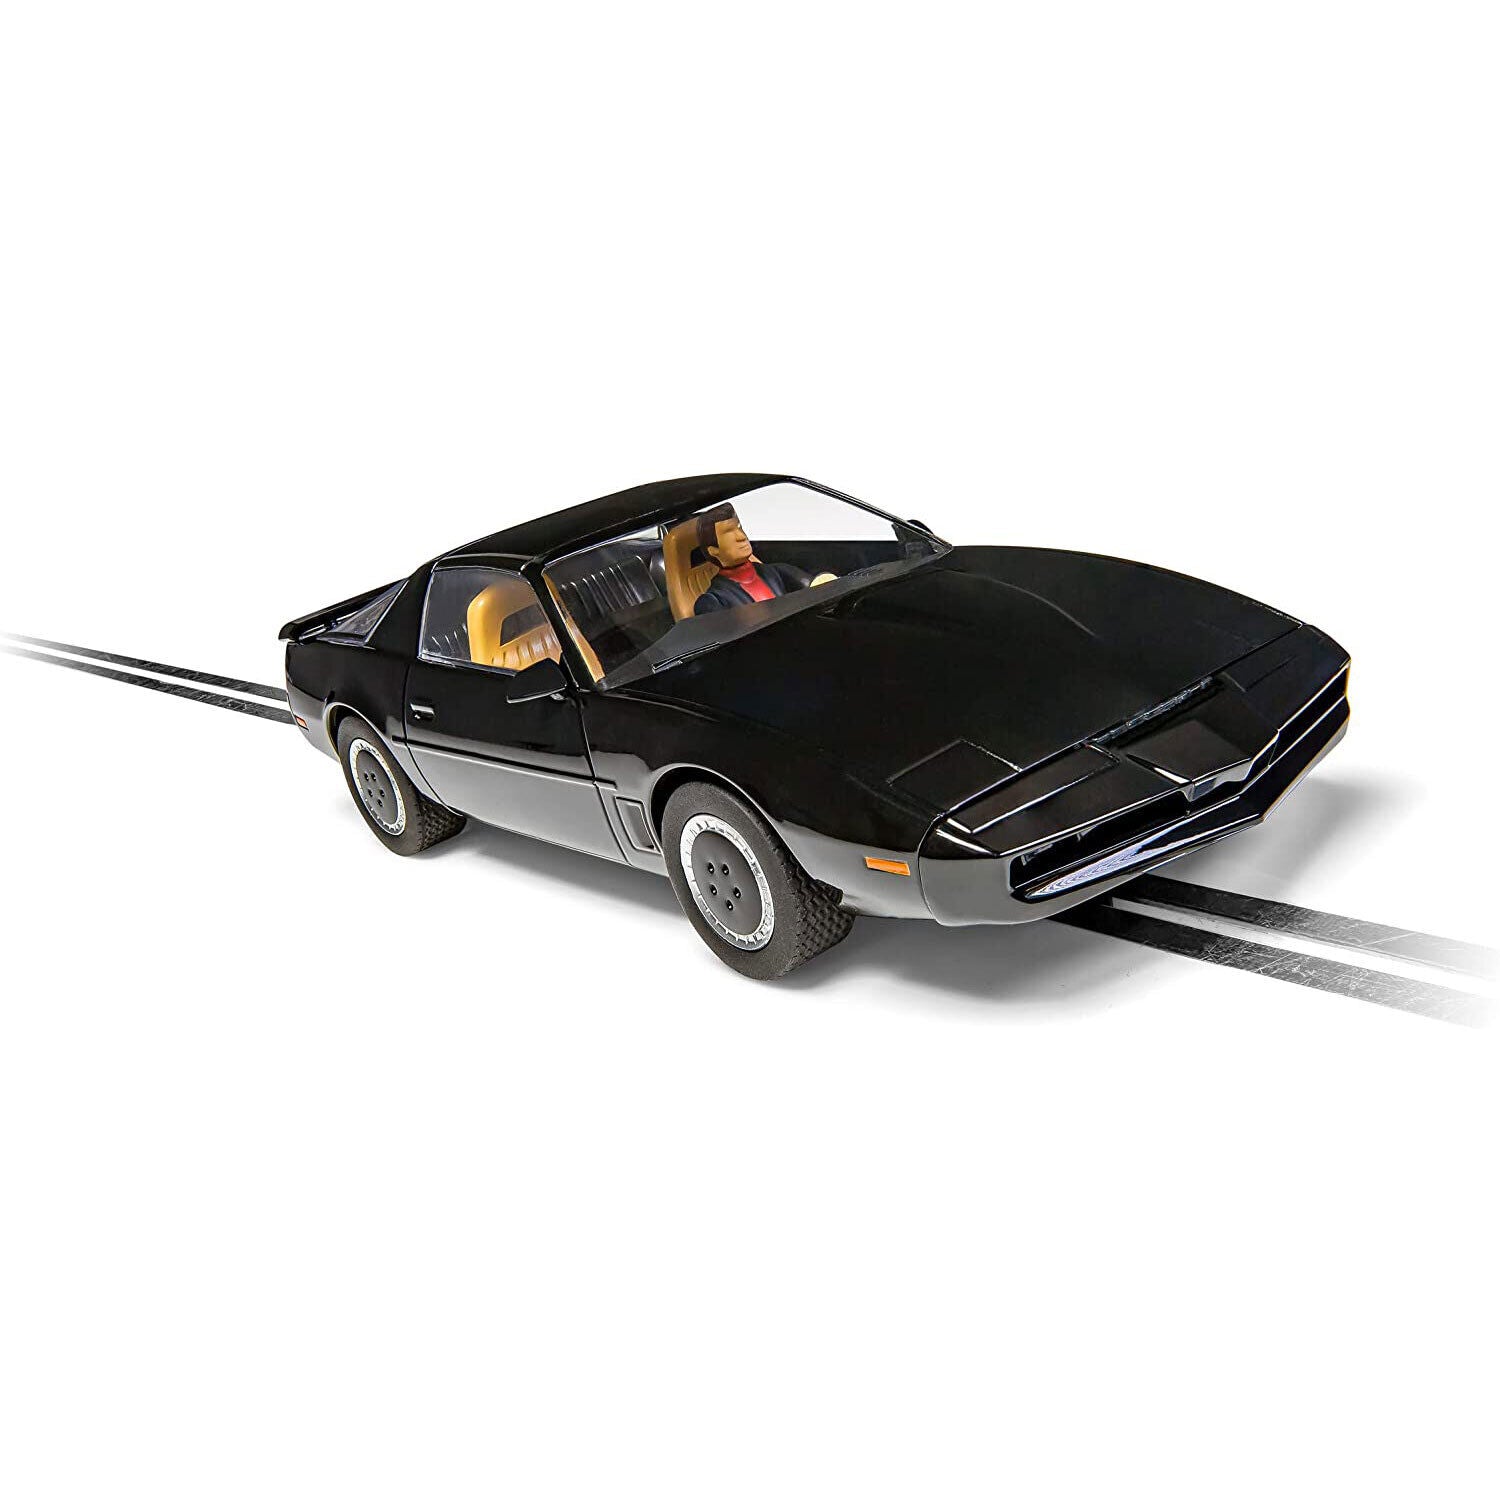 New Scalextric 1:32 Knight Rider K.I.T.T. Slot Car - Sealed Box